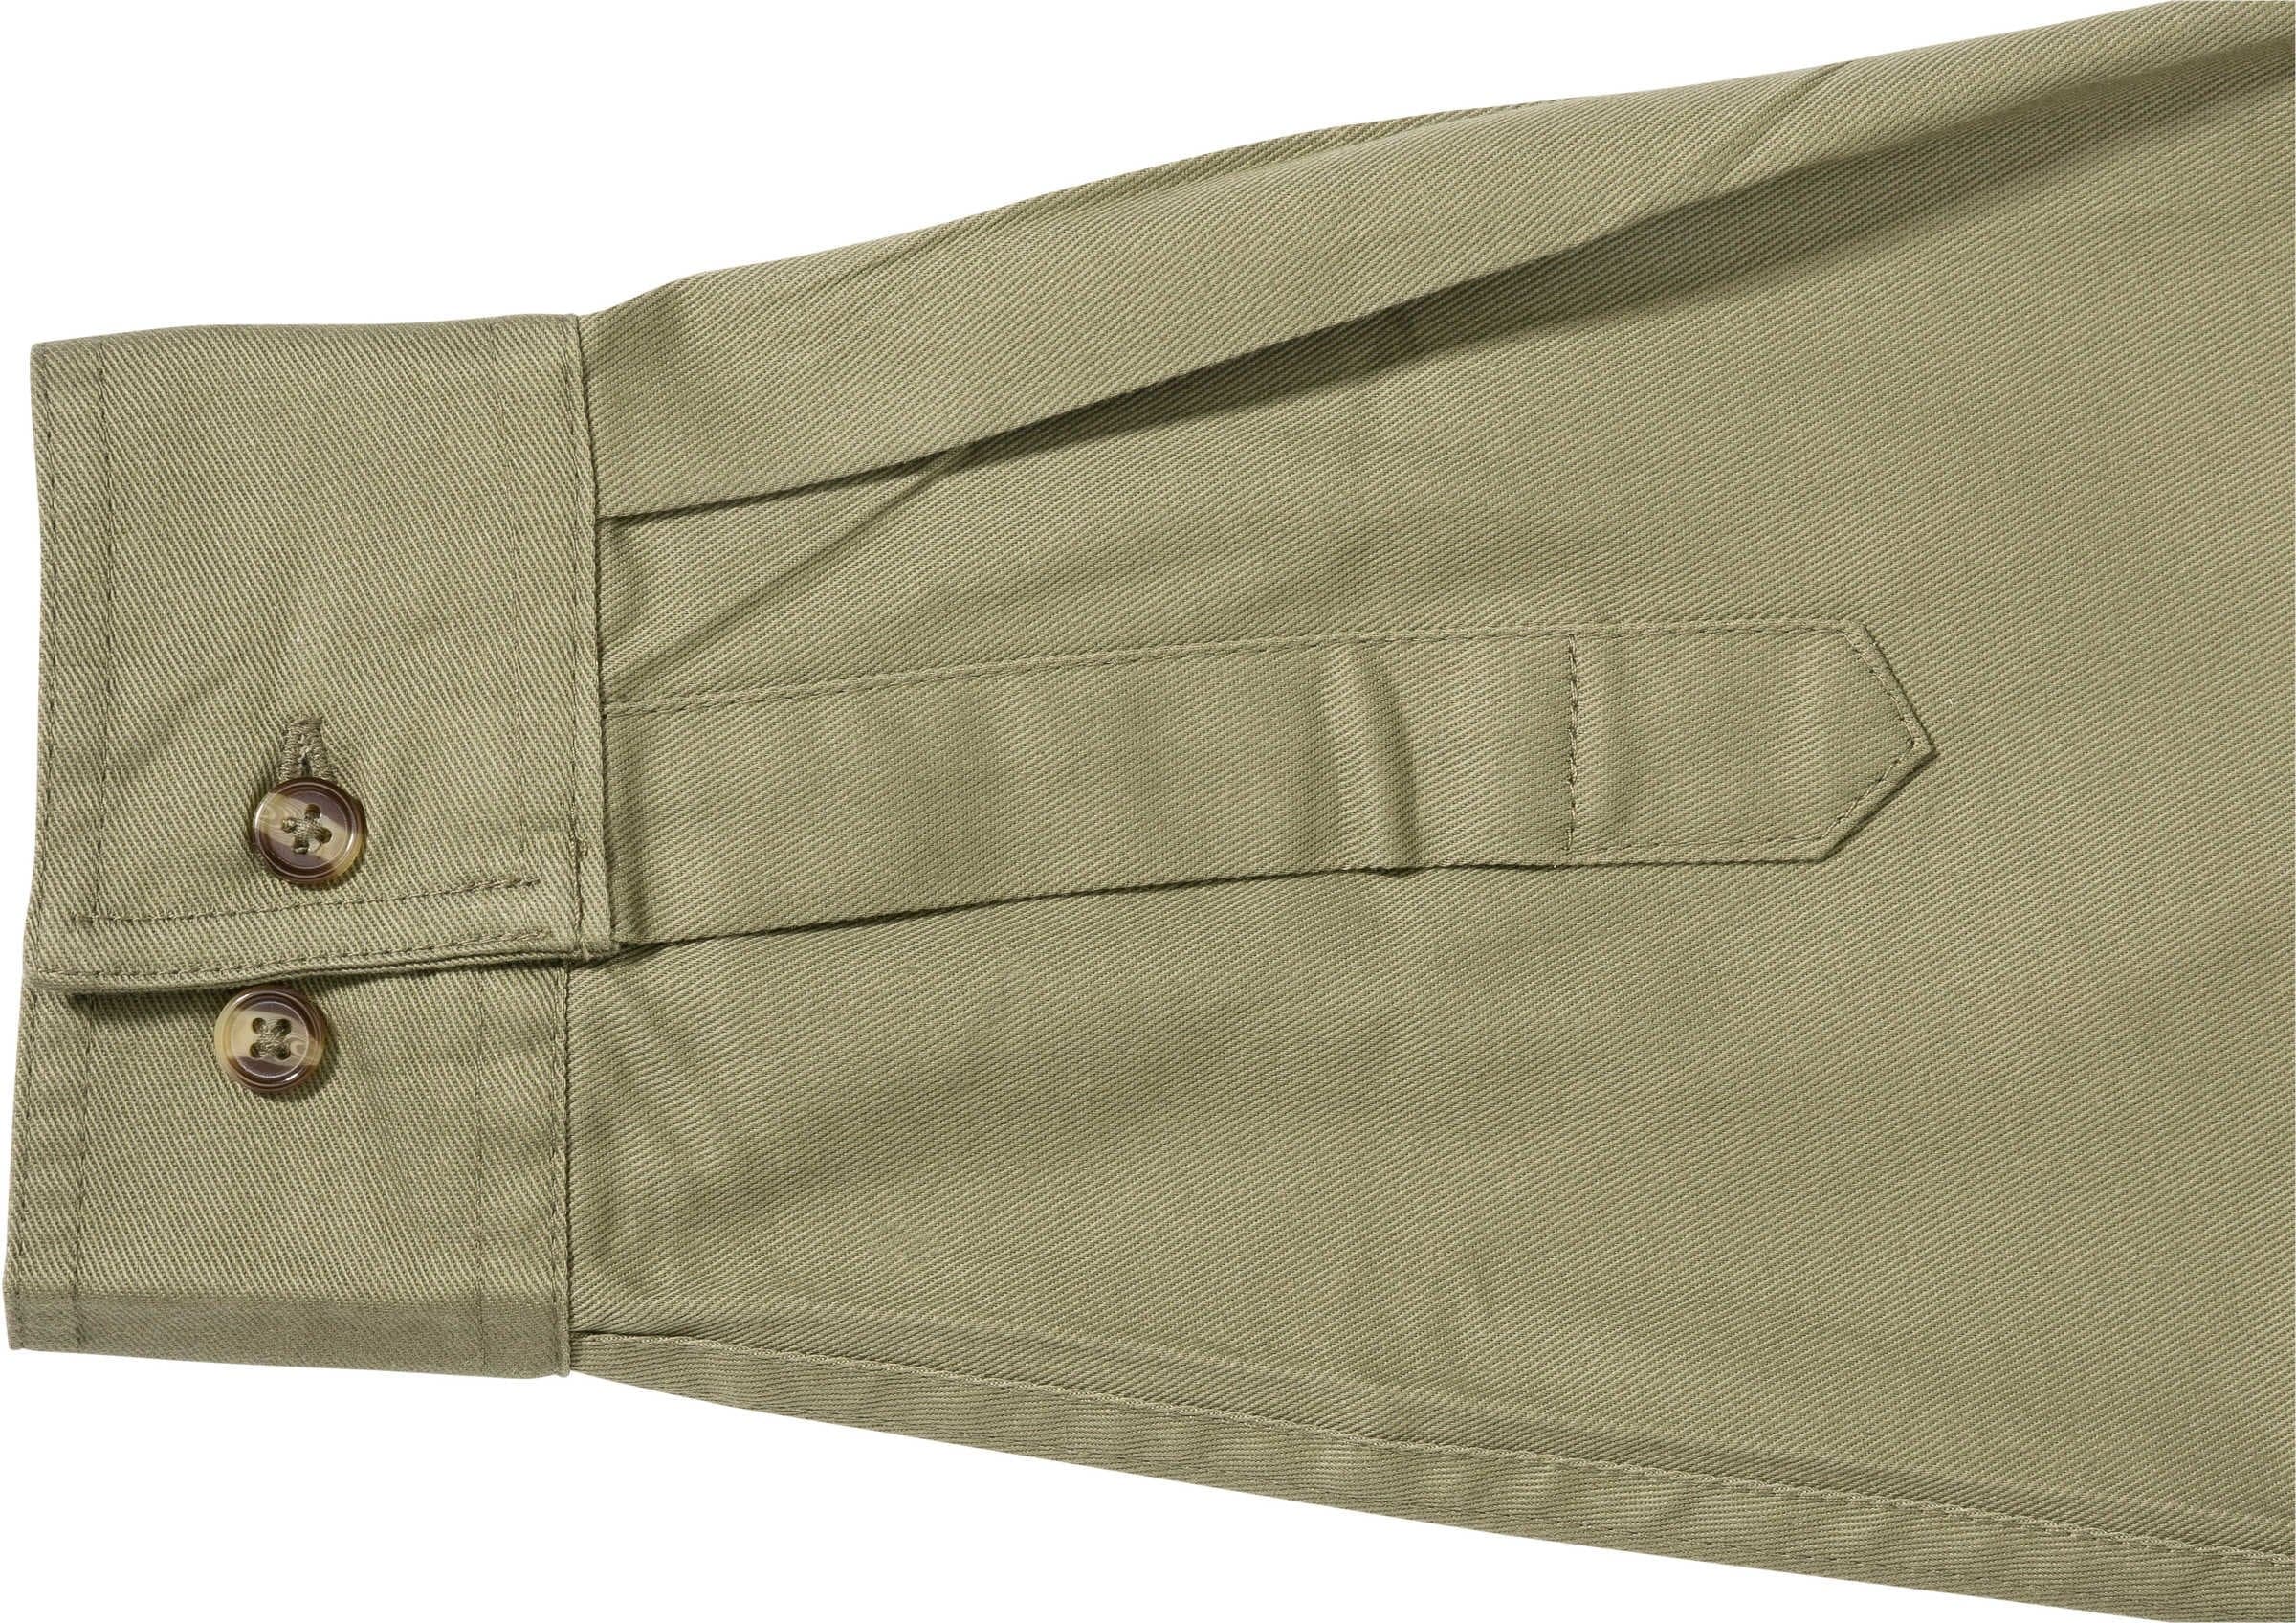 Bisley Original Cotton Drill Shirt - Long Sleeve (BS6433)